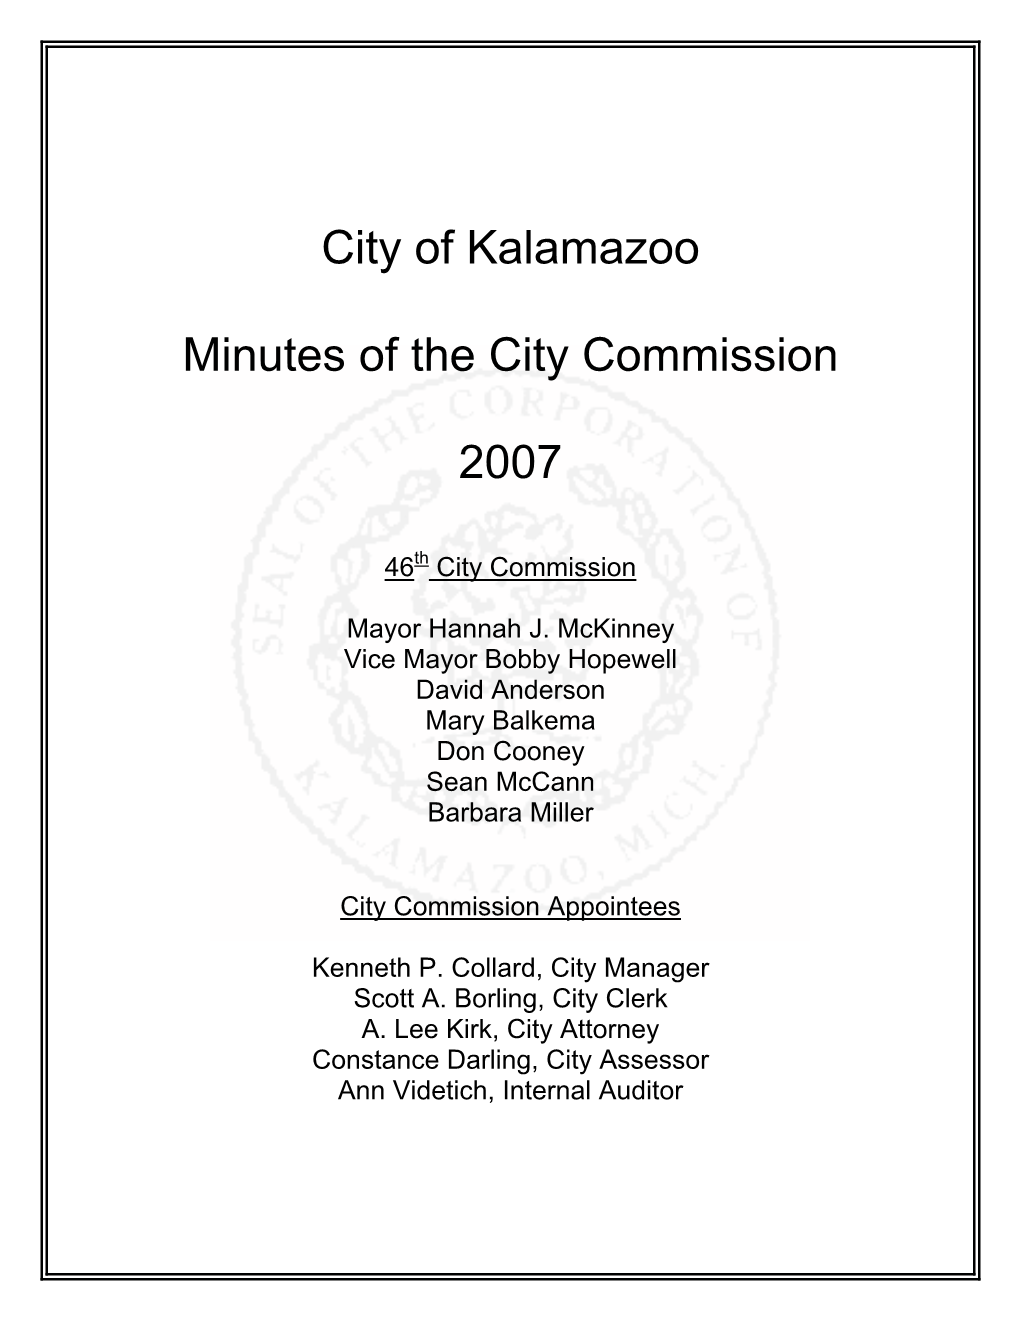 2007 City Commission Minutes